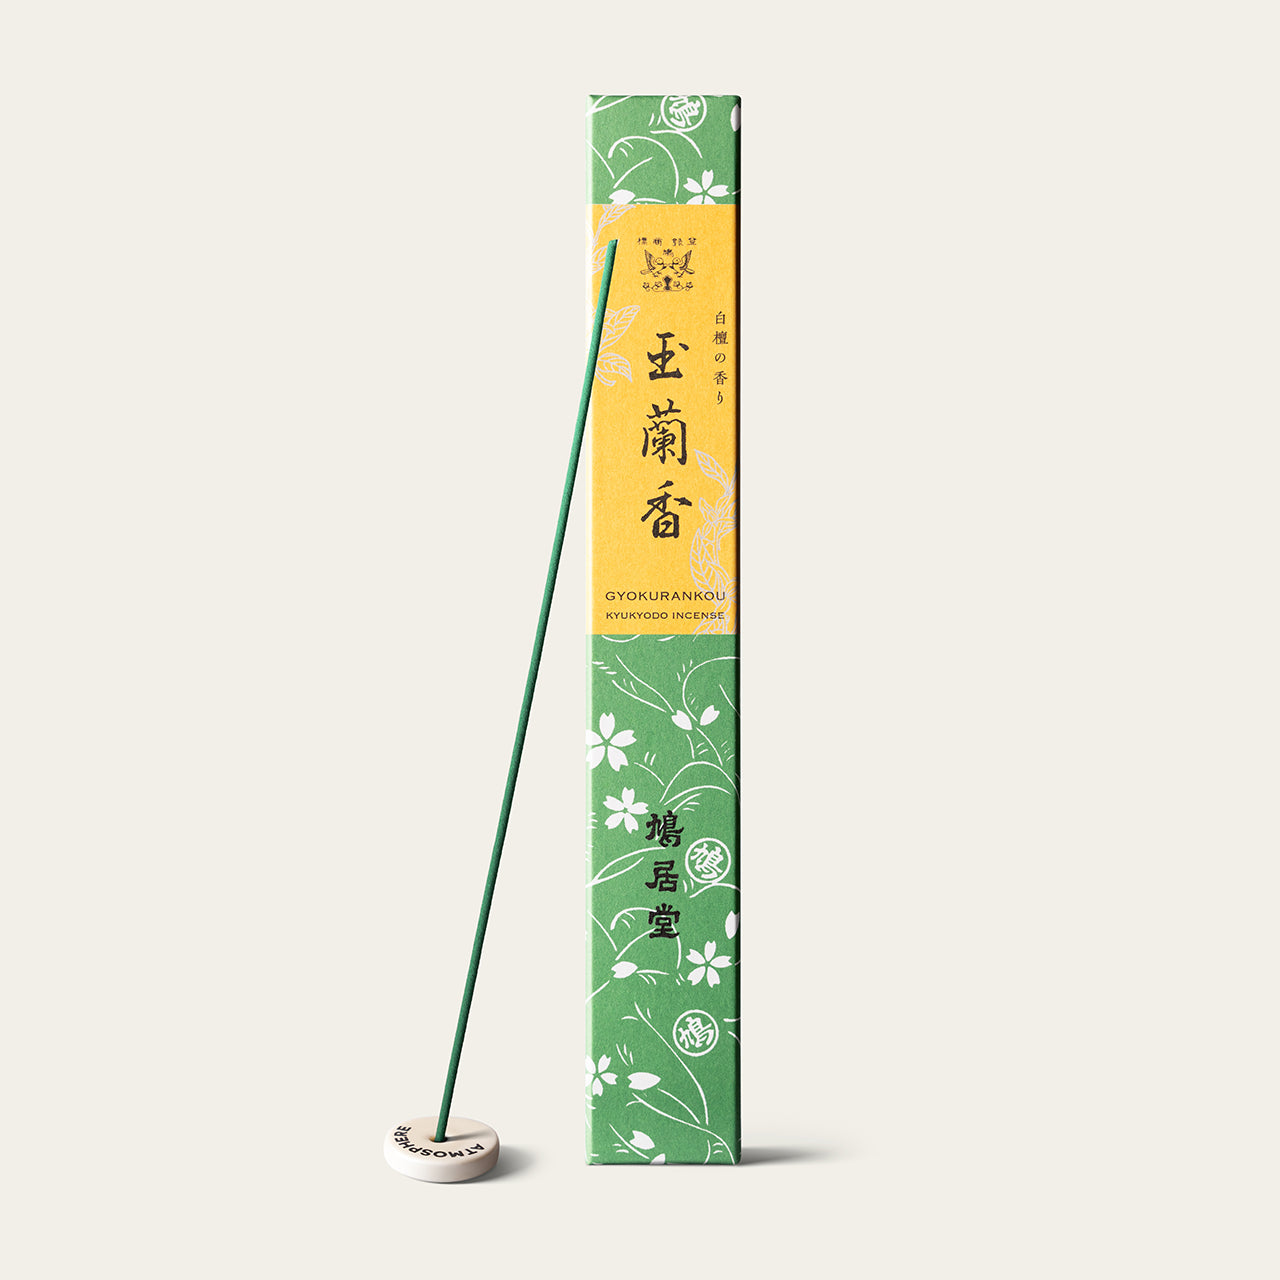 Kyukyodo Magnolia Gyokurankou 17cm Japanese incense sticks (60 sticks) with Atmosphere ceramic incense holder